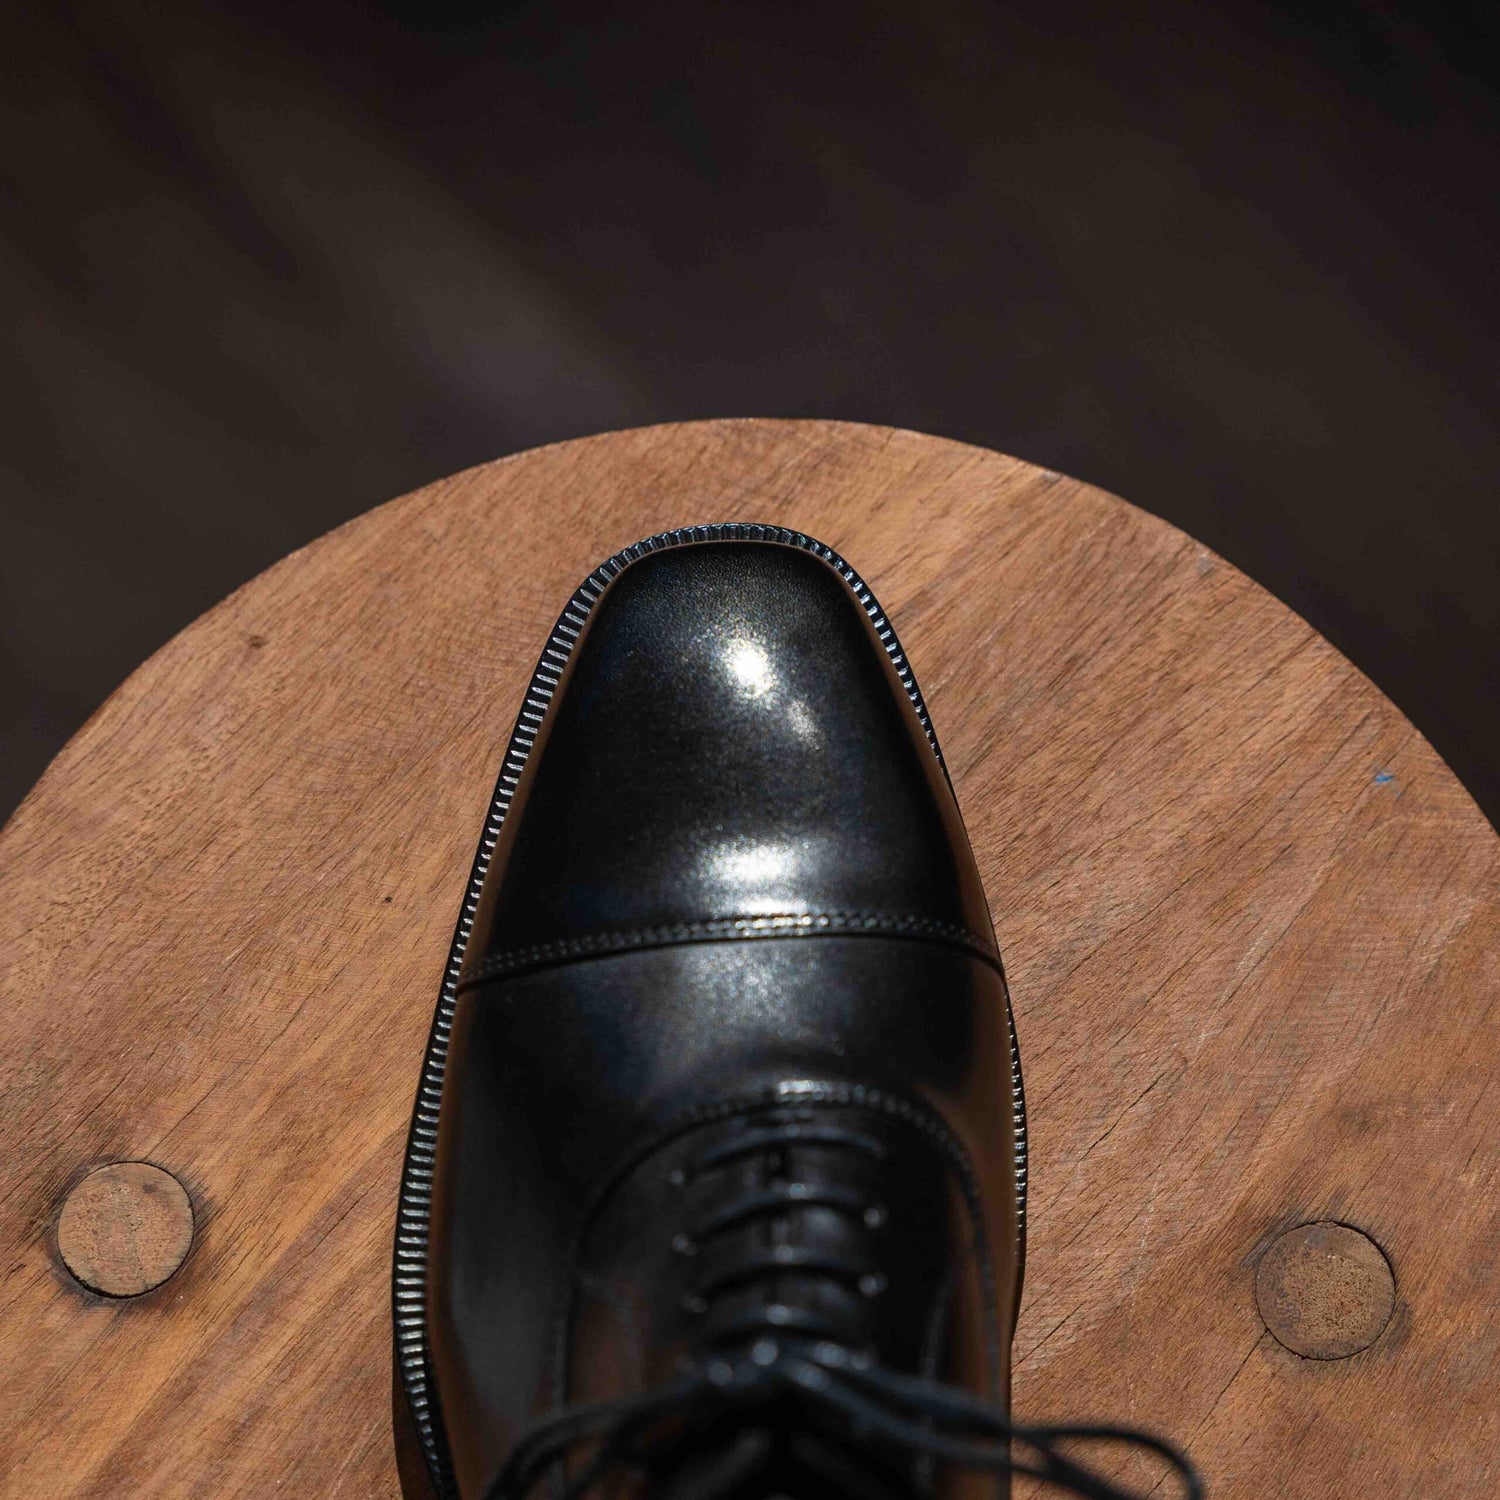 Captoe Oxford Shoe, George, in Black